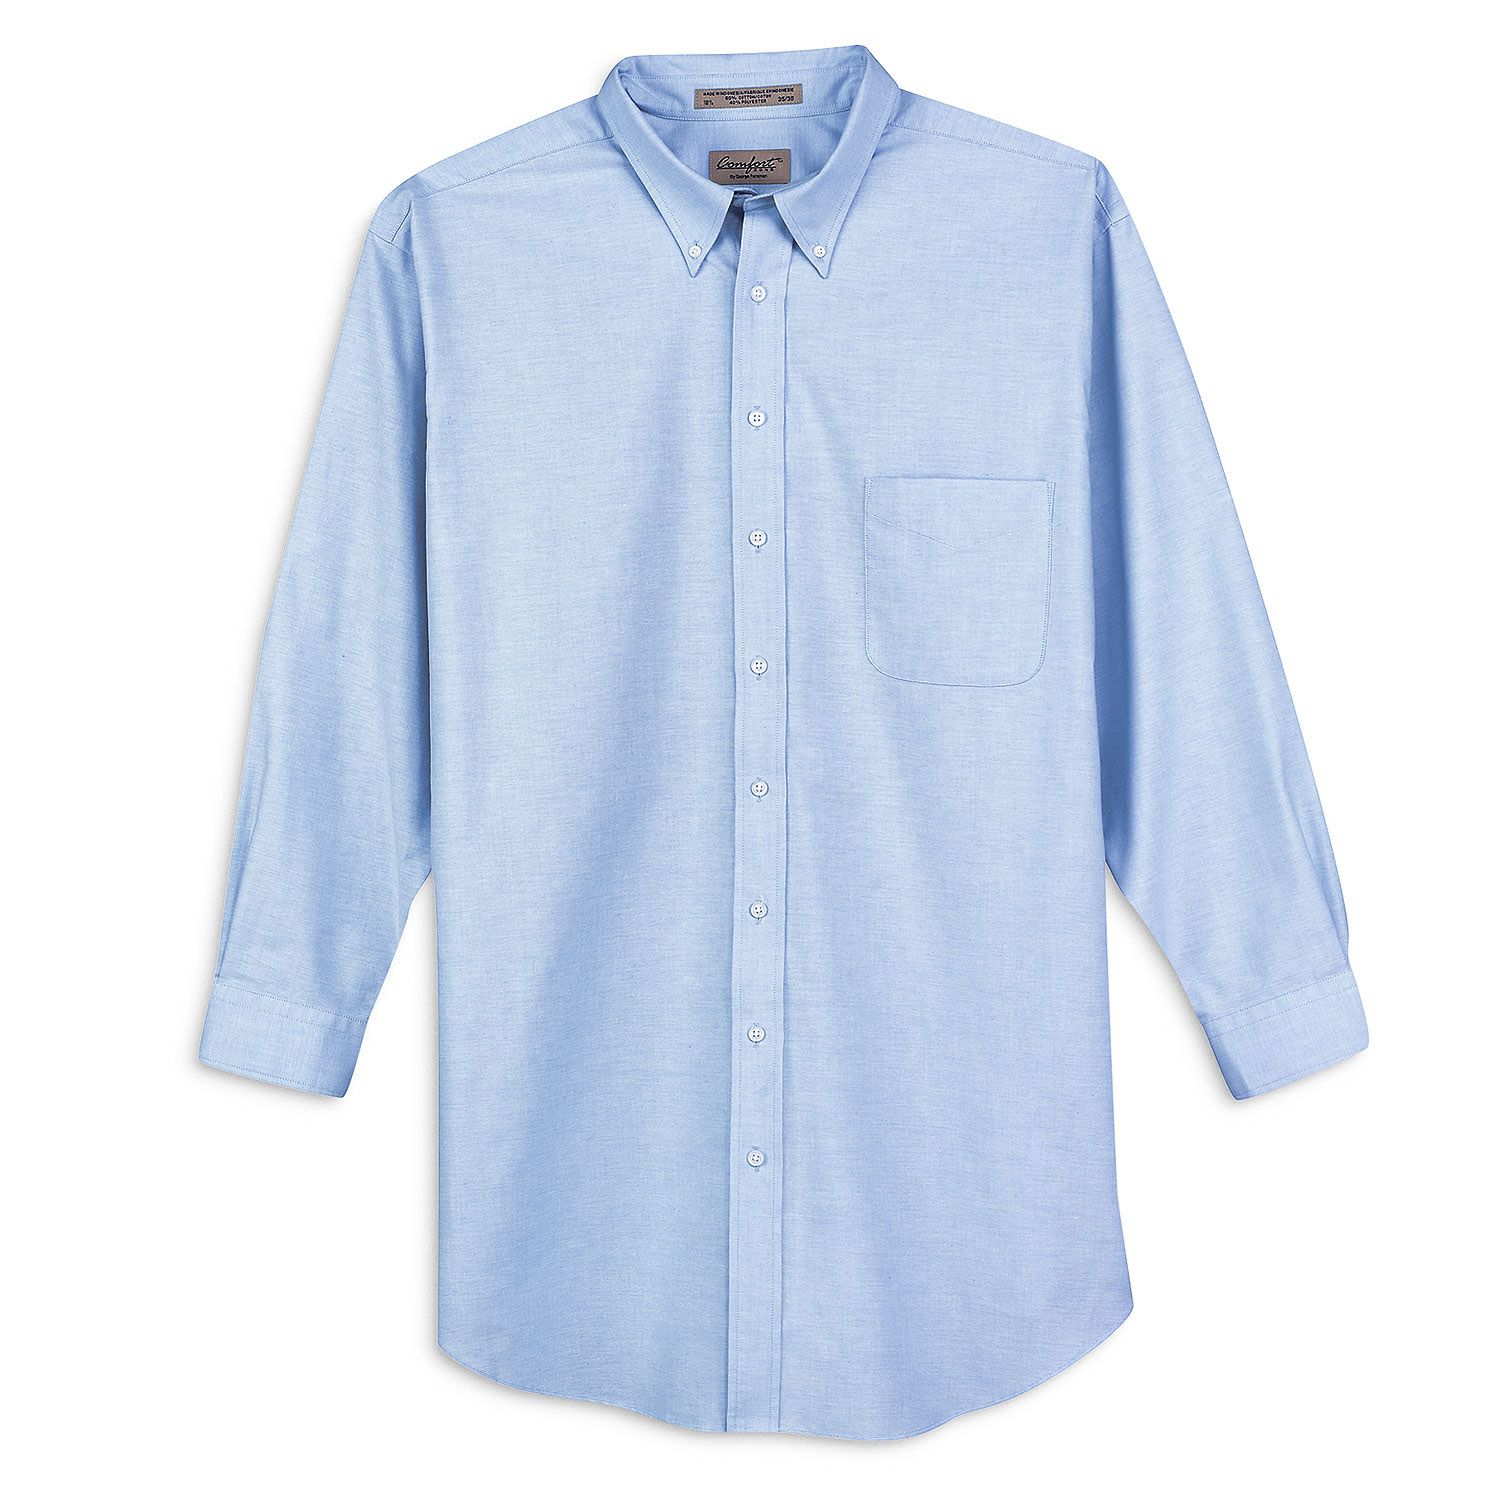 Comfort Zone Neck Relaxer Men's Long Sleeve Oxford Shirt - Big & Tall